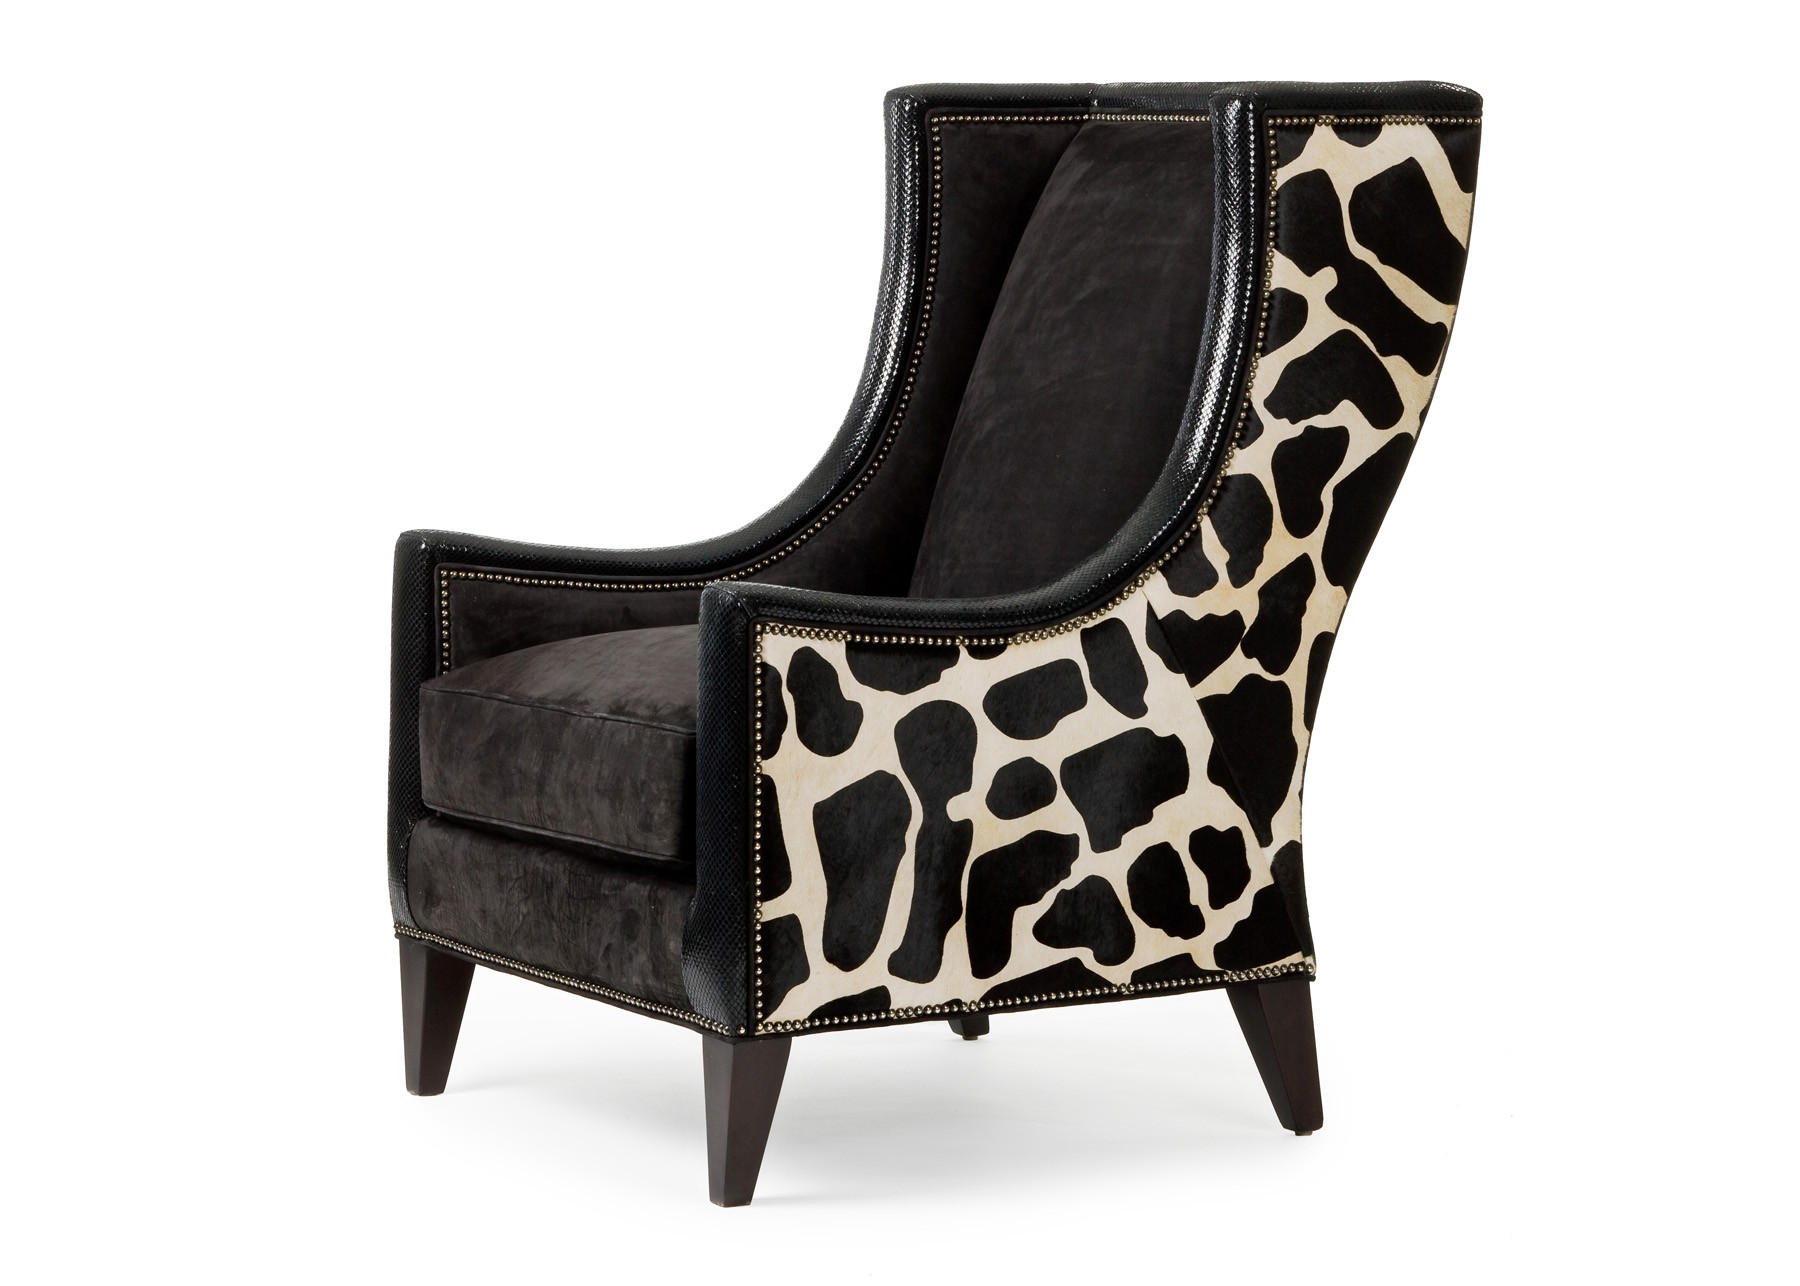 Cabot Wrenn Luxe Lounge Chair